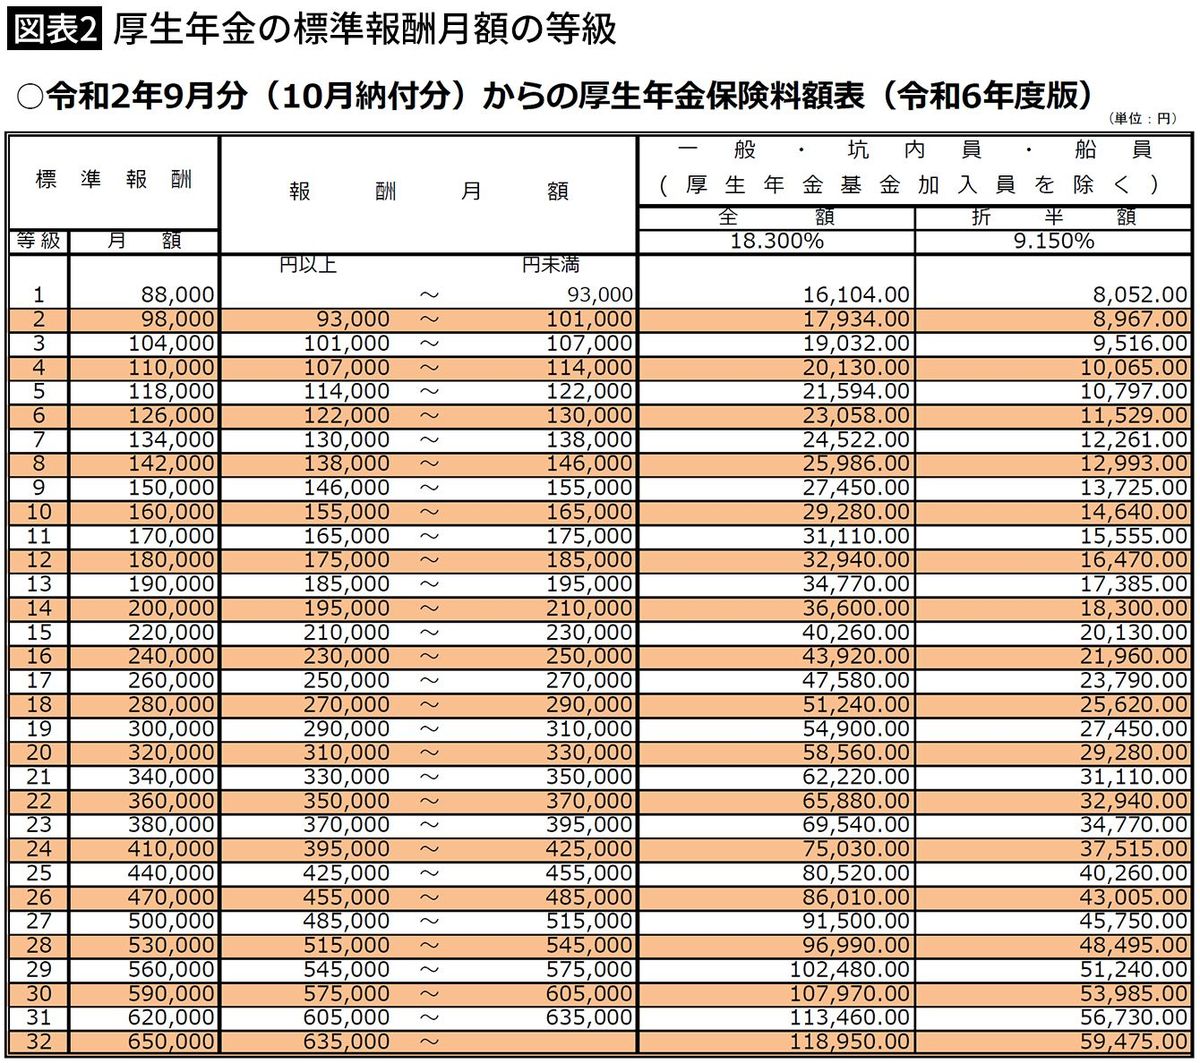 【図表2】厚生年金の標準報酬月額の等級